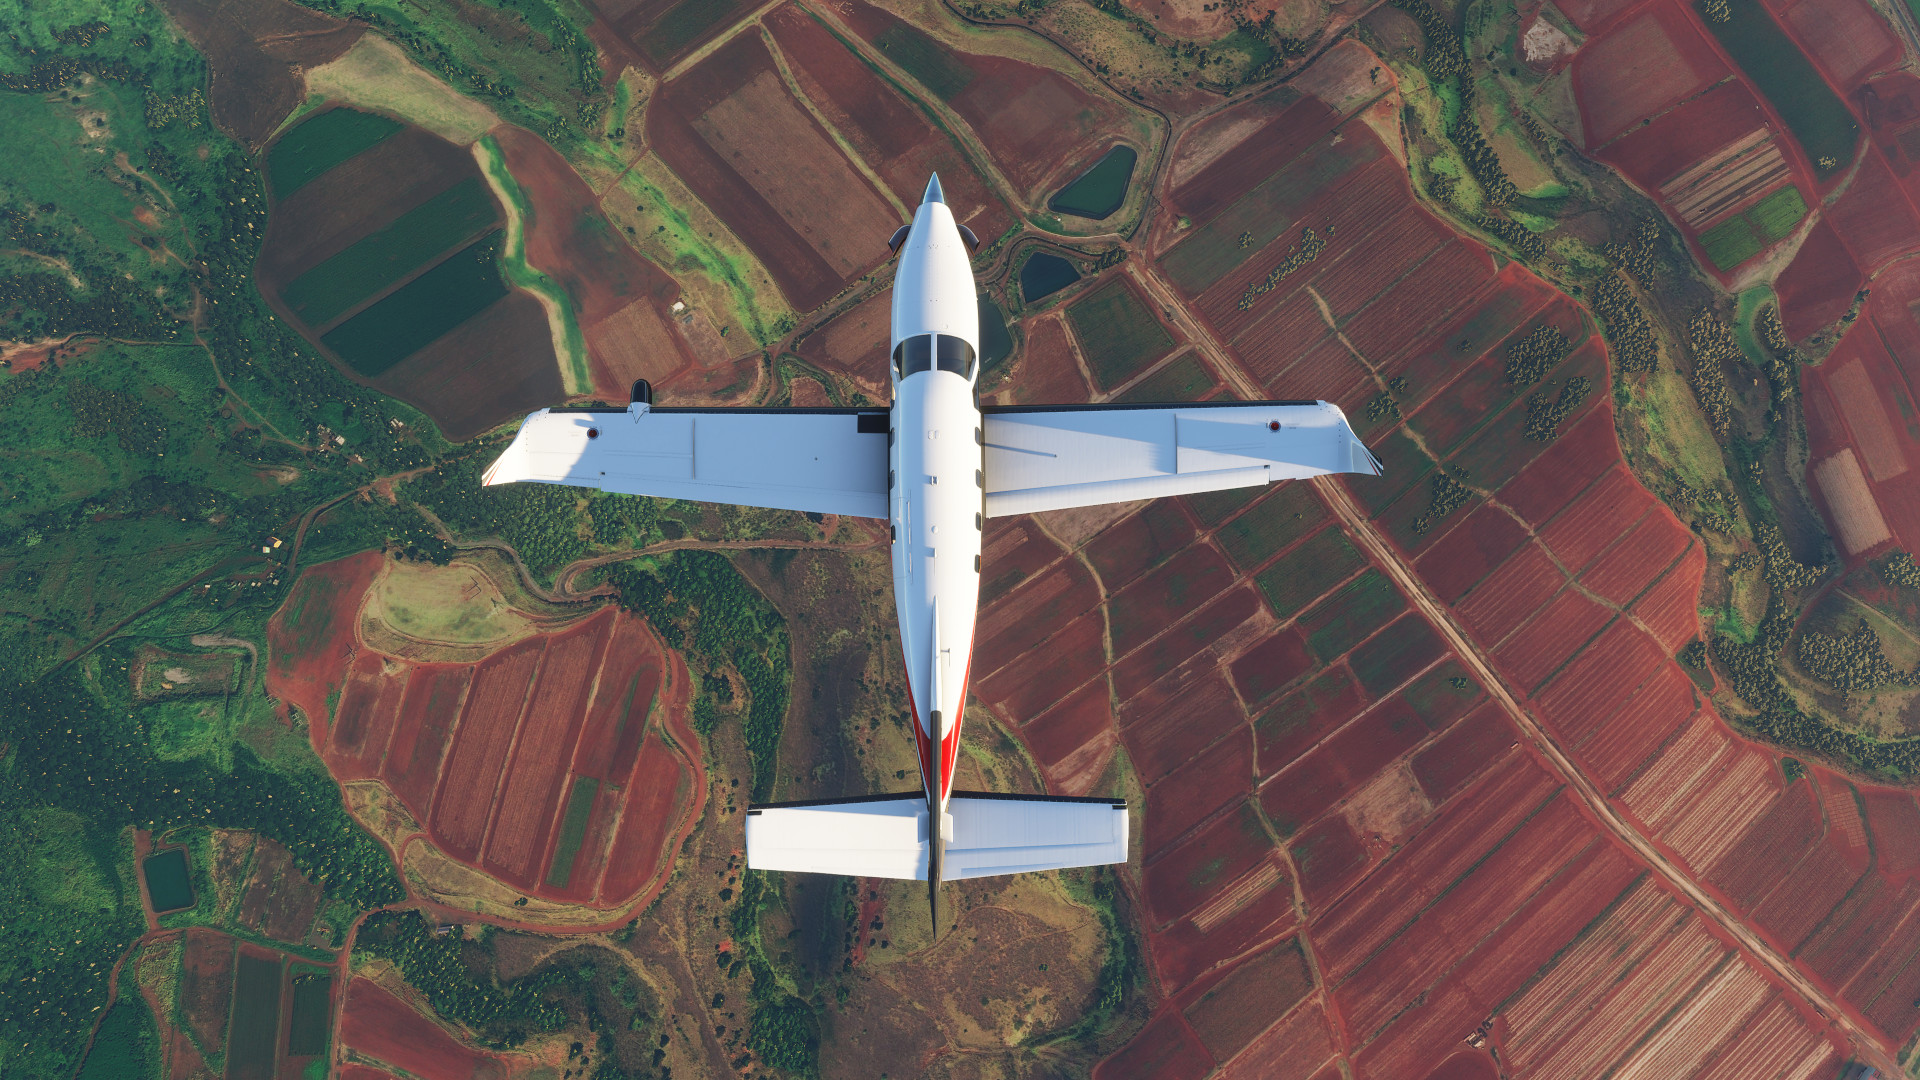 Microsoft Flight Simulator Image